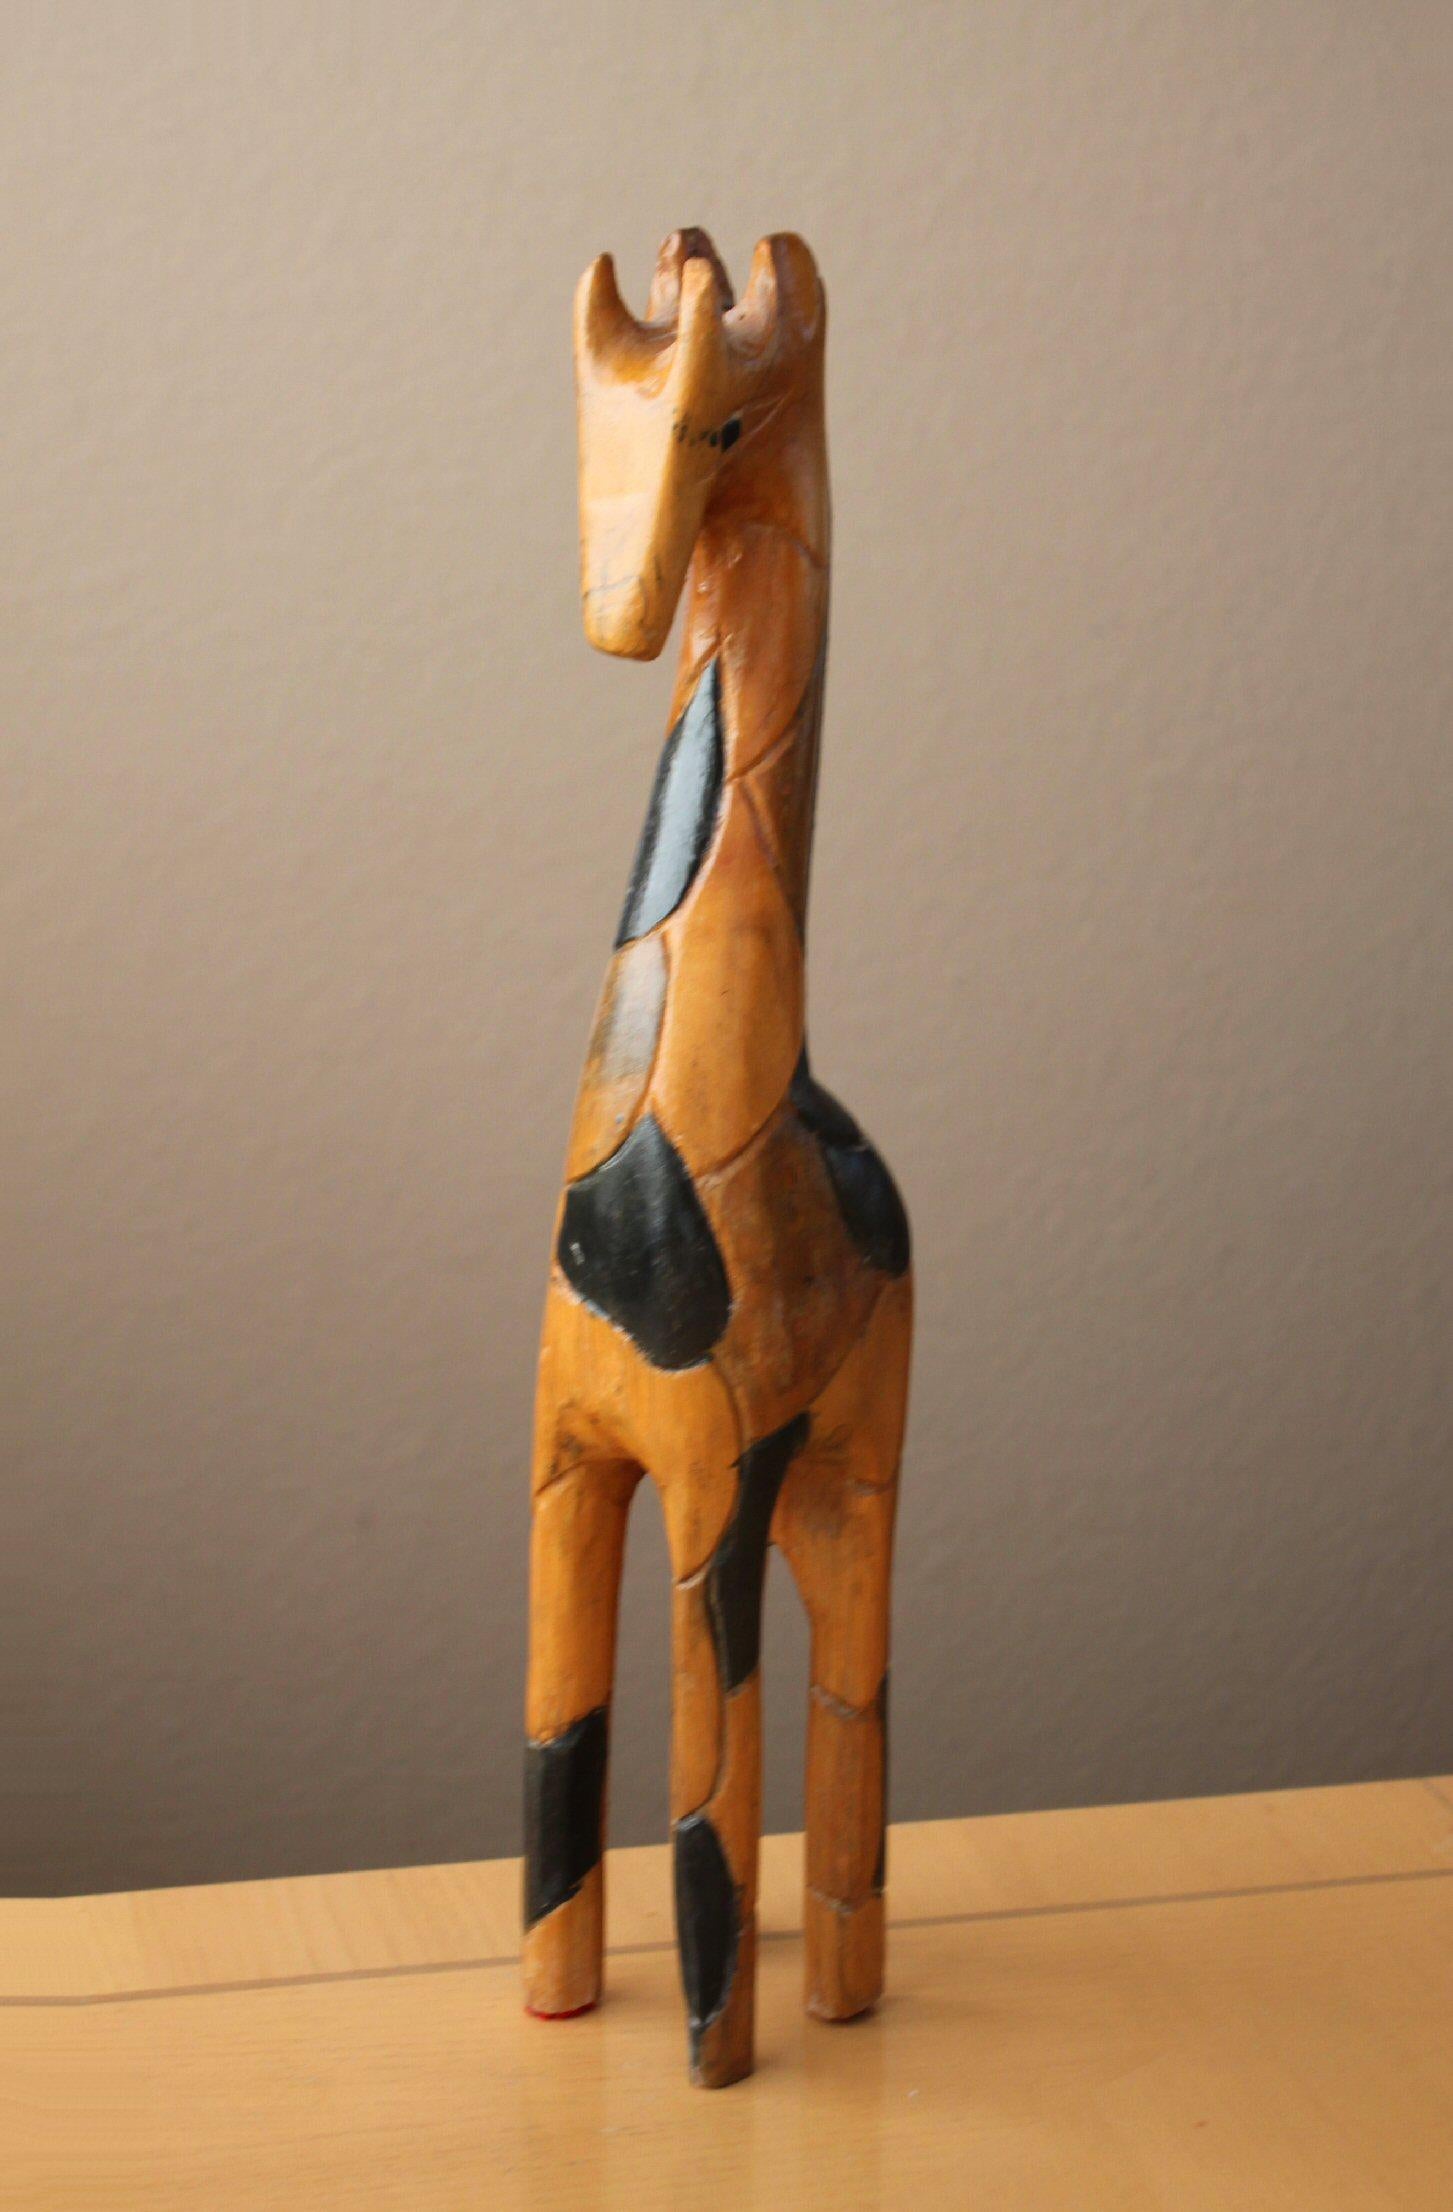 Stunning!

Mid Century Modern
Abstract Giraffe Sculpture
Hand Carved & Polychromed

20